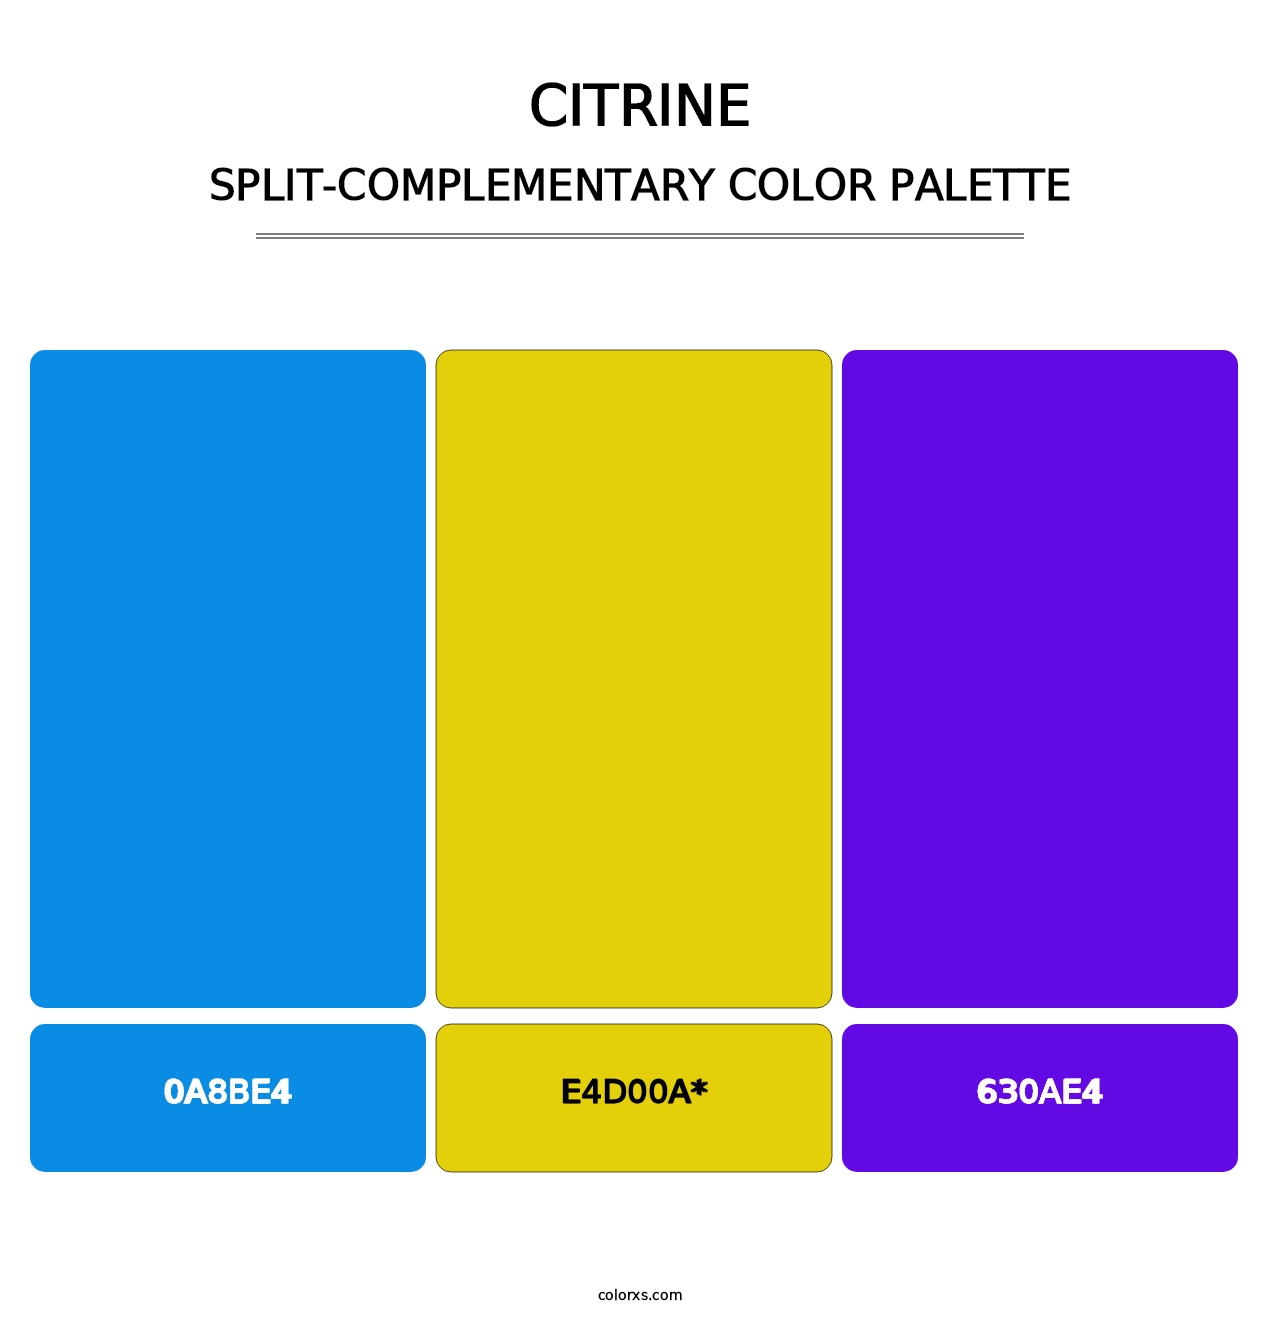 Citrine - Split-Complementary Color Palette